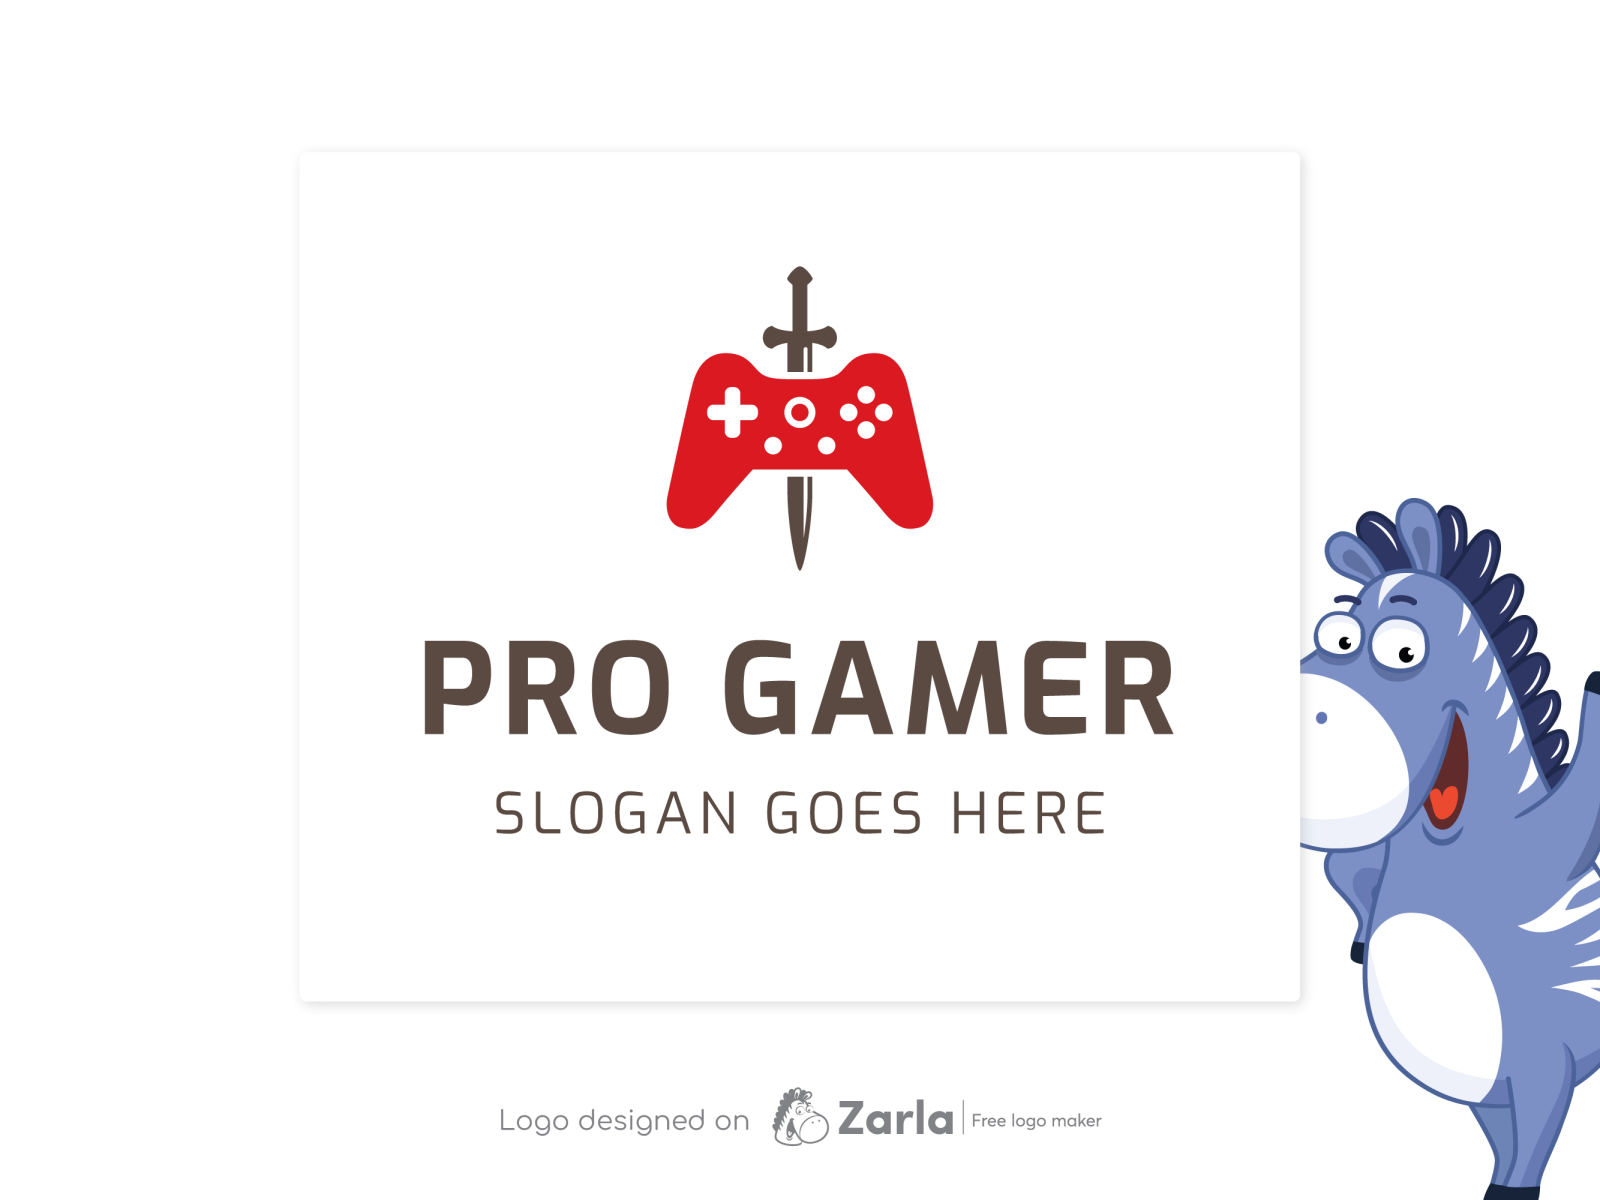 Gaming Logo by Zarla logo maker on Dribbble